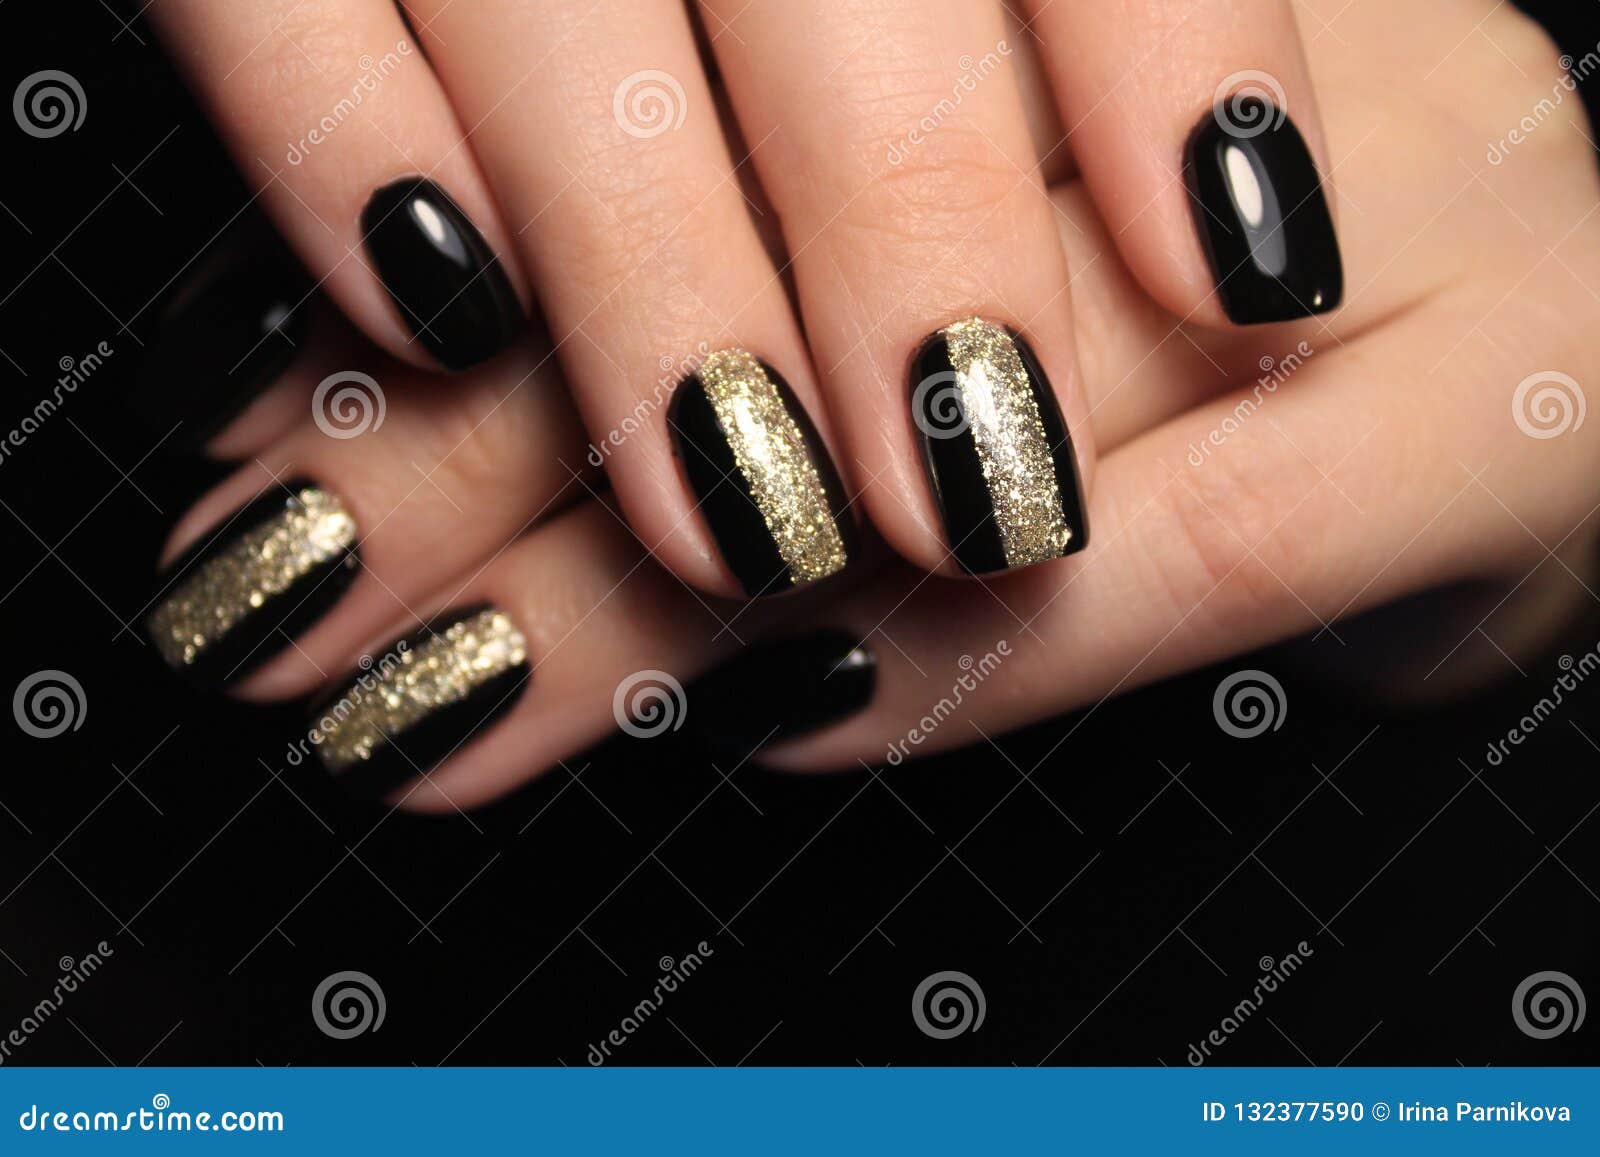 Long black nails stock photo. Image of makeup, beautiful - 132377590